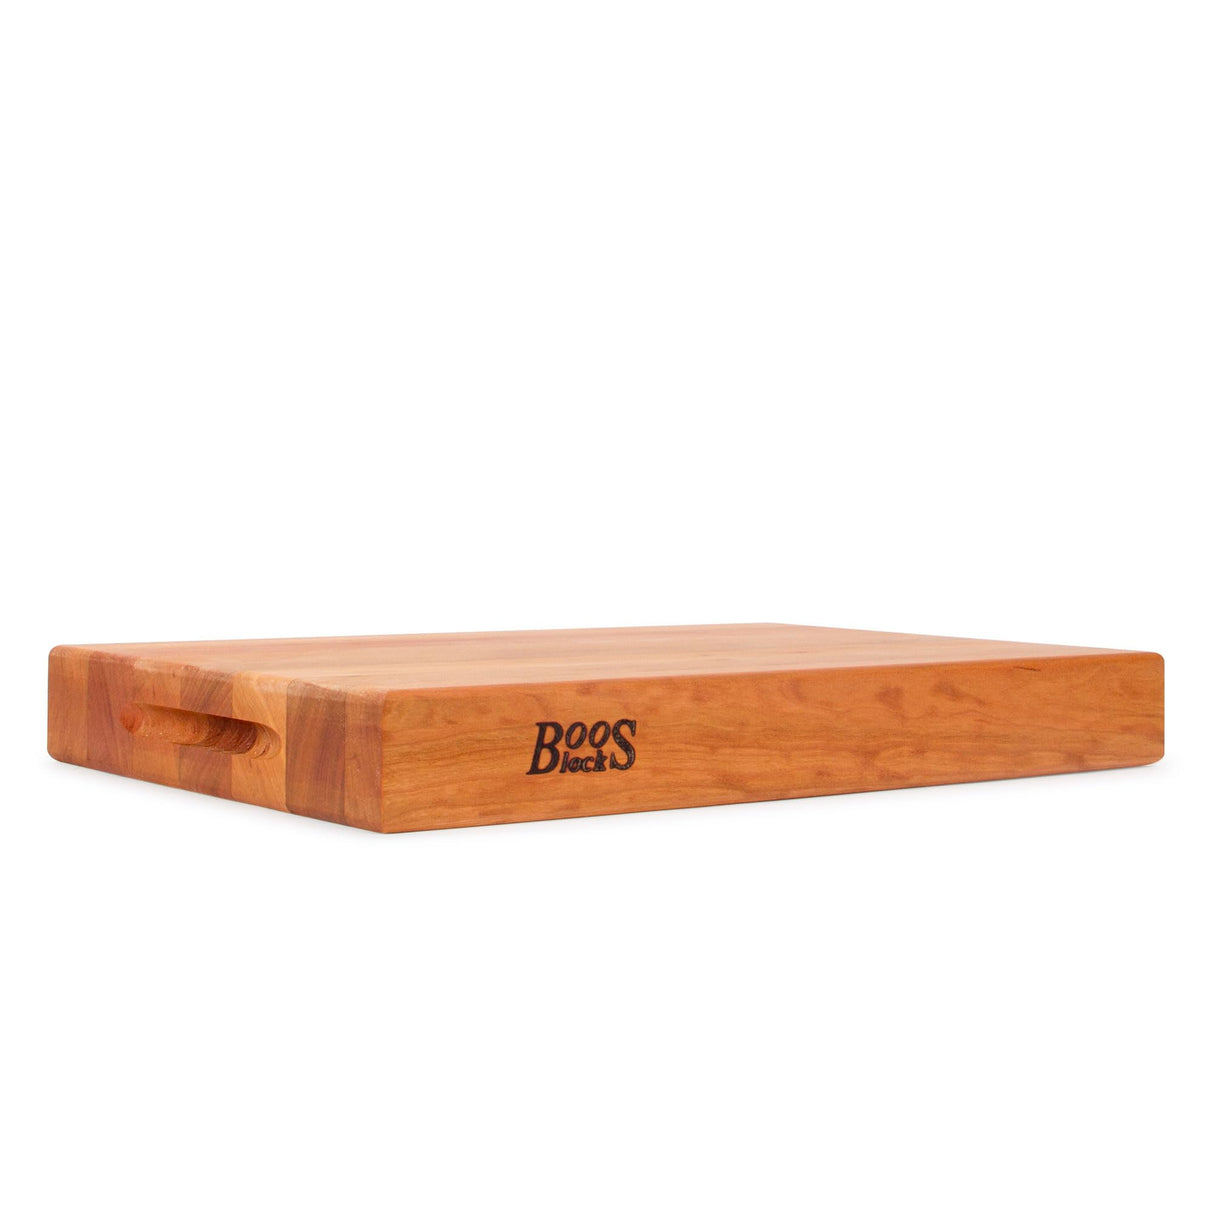 John Boos CHY-RA01 Cherry Wood Cutting Board for Kitchen Prep 18 Inches x 12 Inches, 2.25 Thick Reversible End Grain Rectangular Charcuterie Block 18X12X2.25 CHY-EDGE GR-REV-RA BRD-